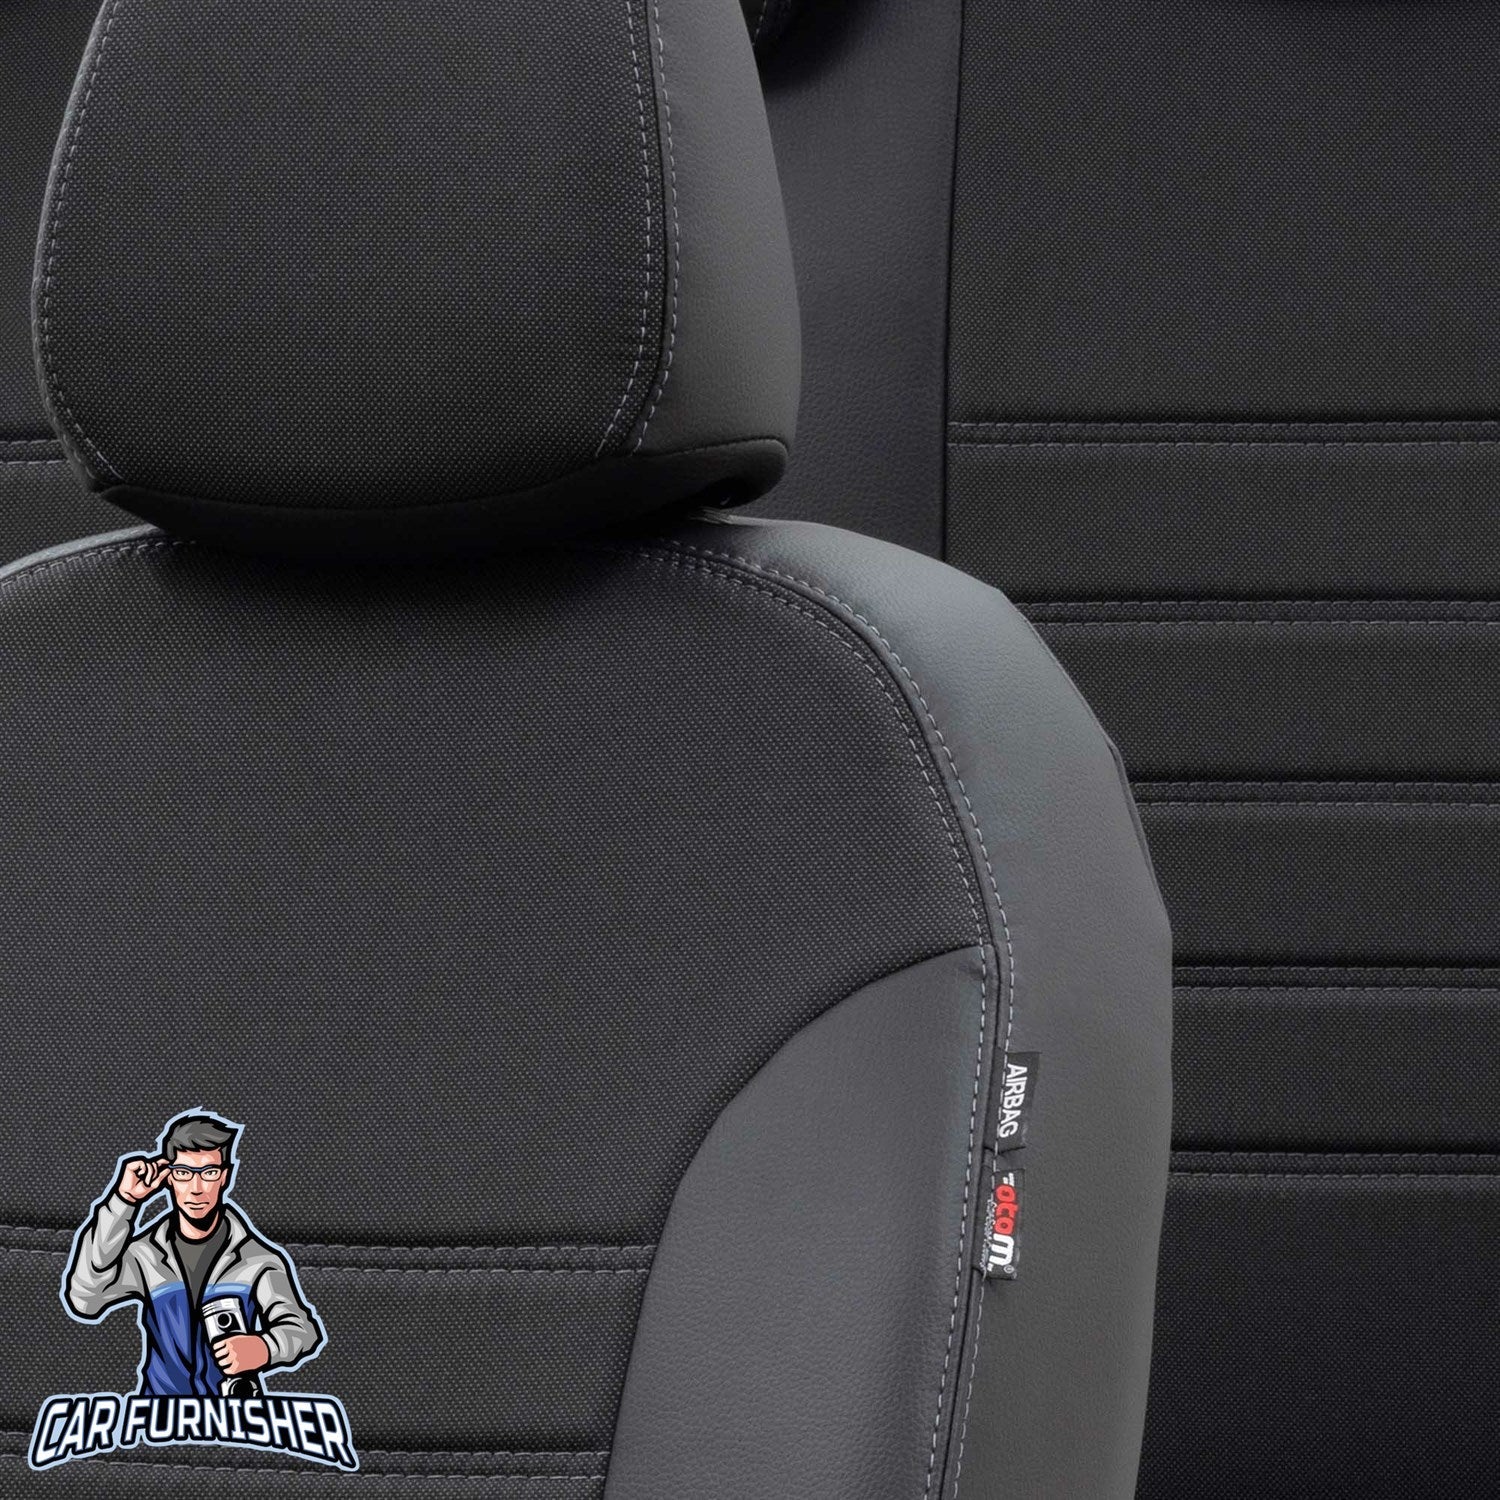 Peugeot Boxer Seat Covers Paris Leather & Jacquard Design Black Leather & Jacquard Fabric